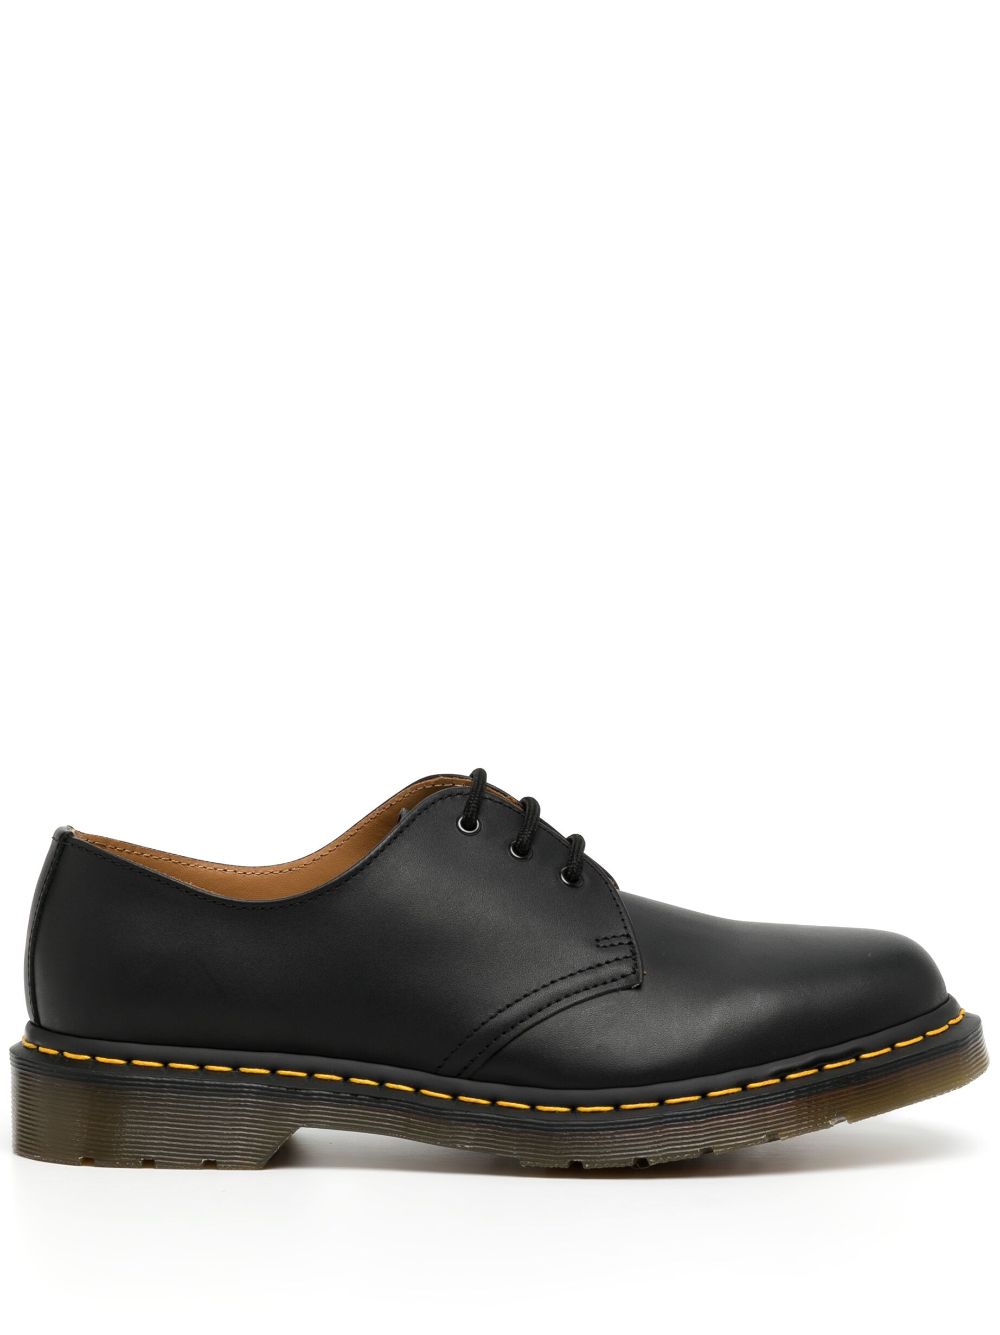 Dr. Martens 1461 leather Oxford shoes - Black von Dr. Martens